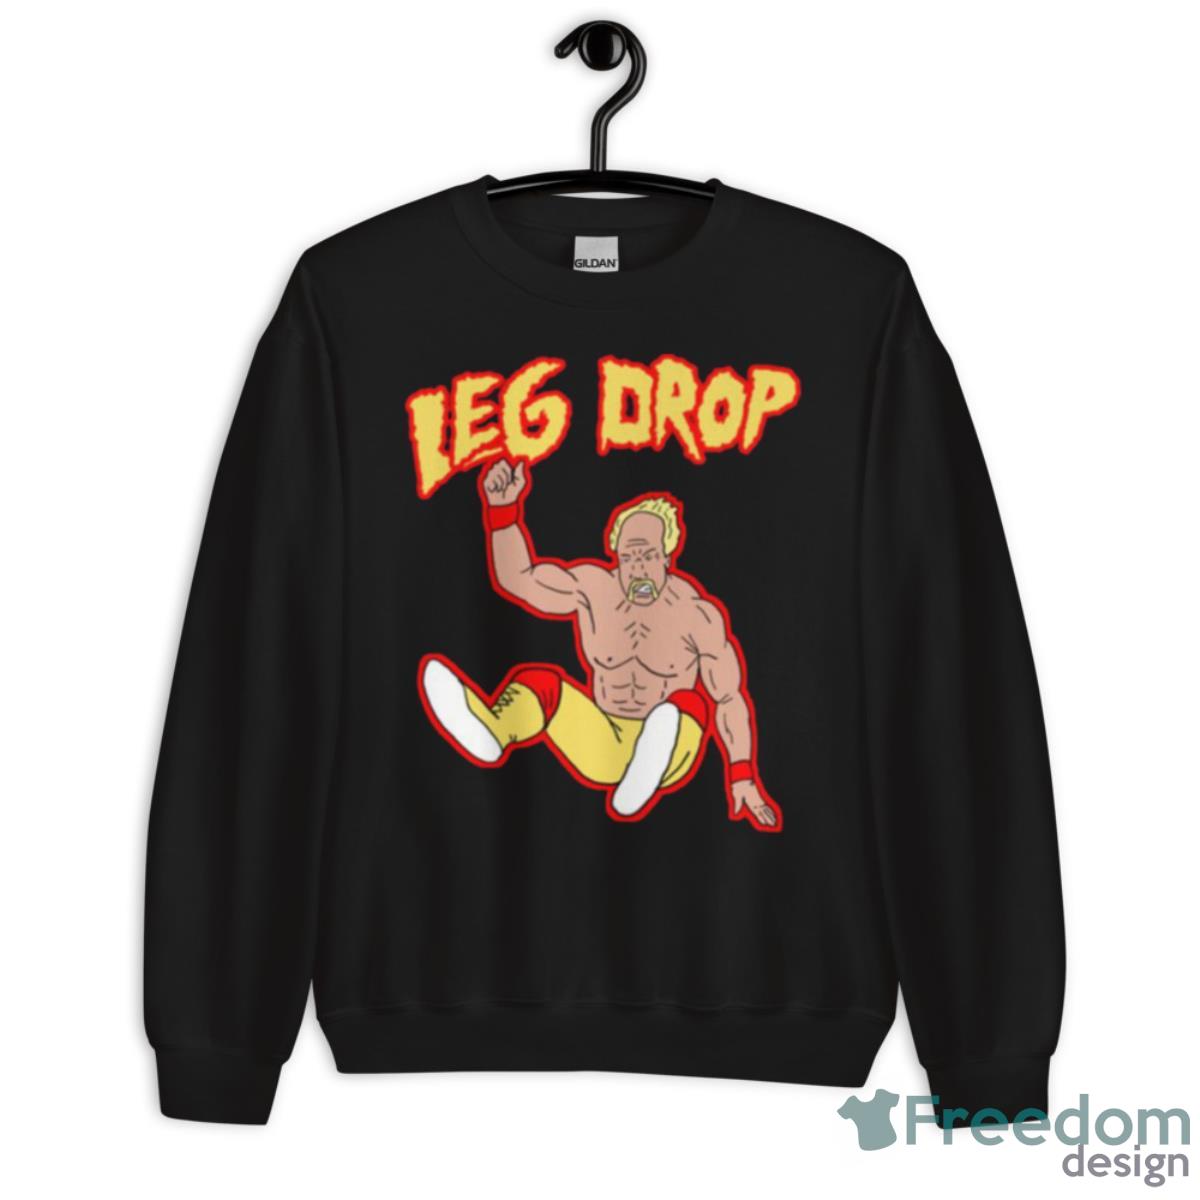 Leg Drop Wwe Wrestling Shirt